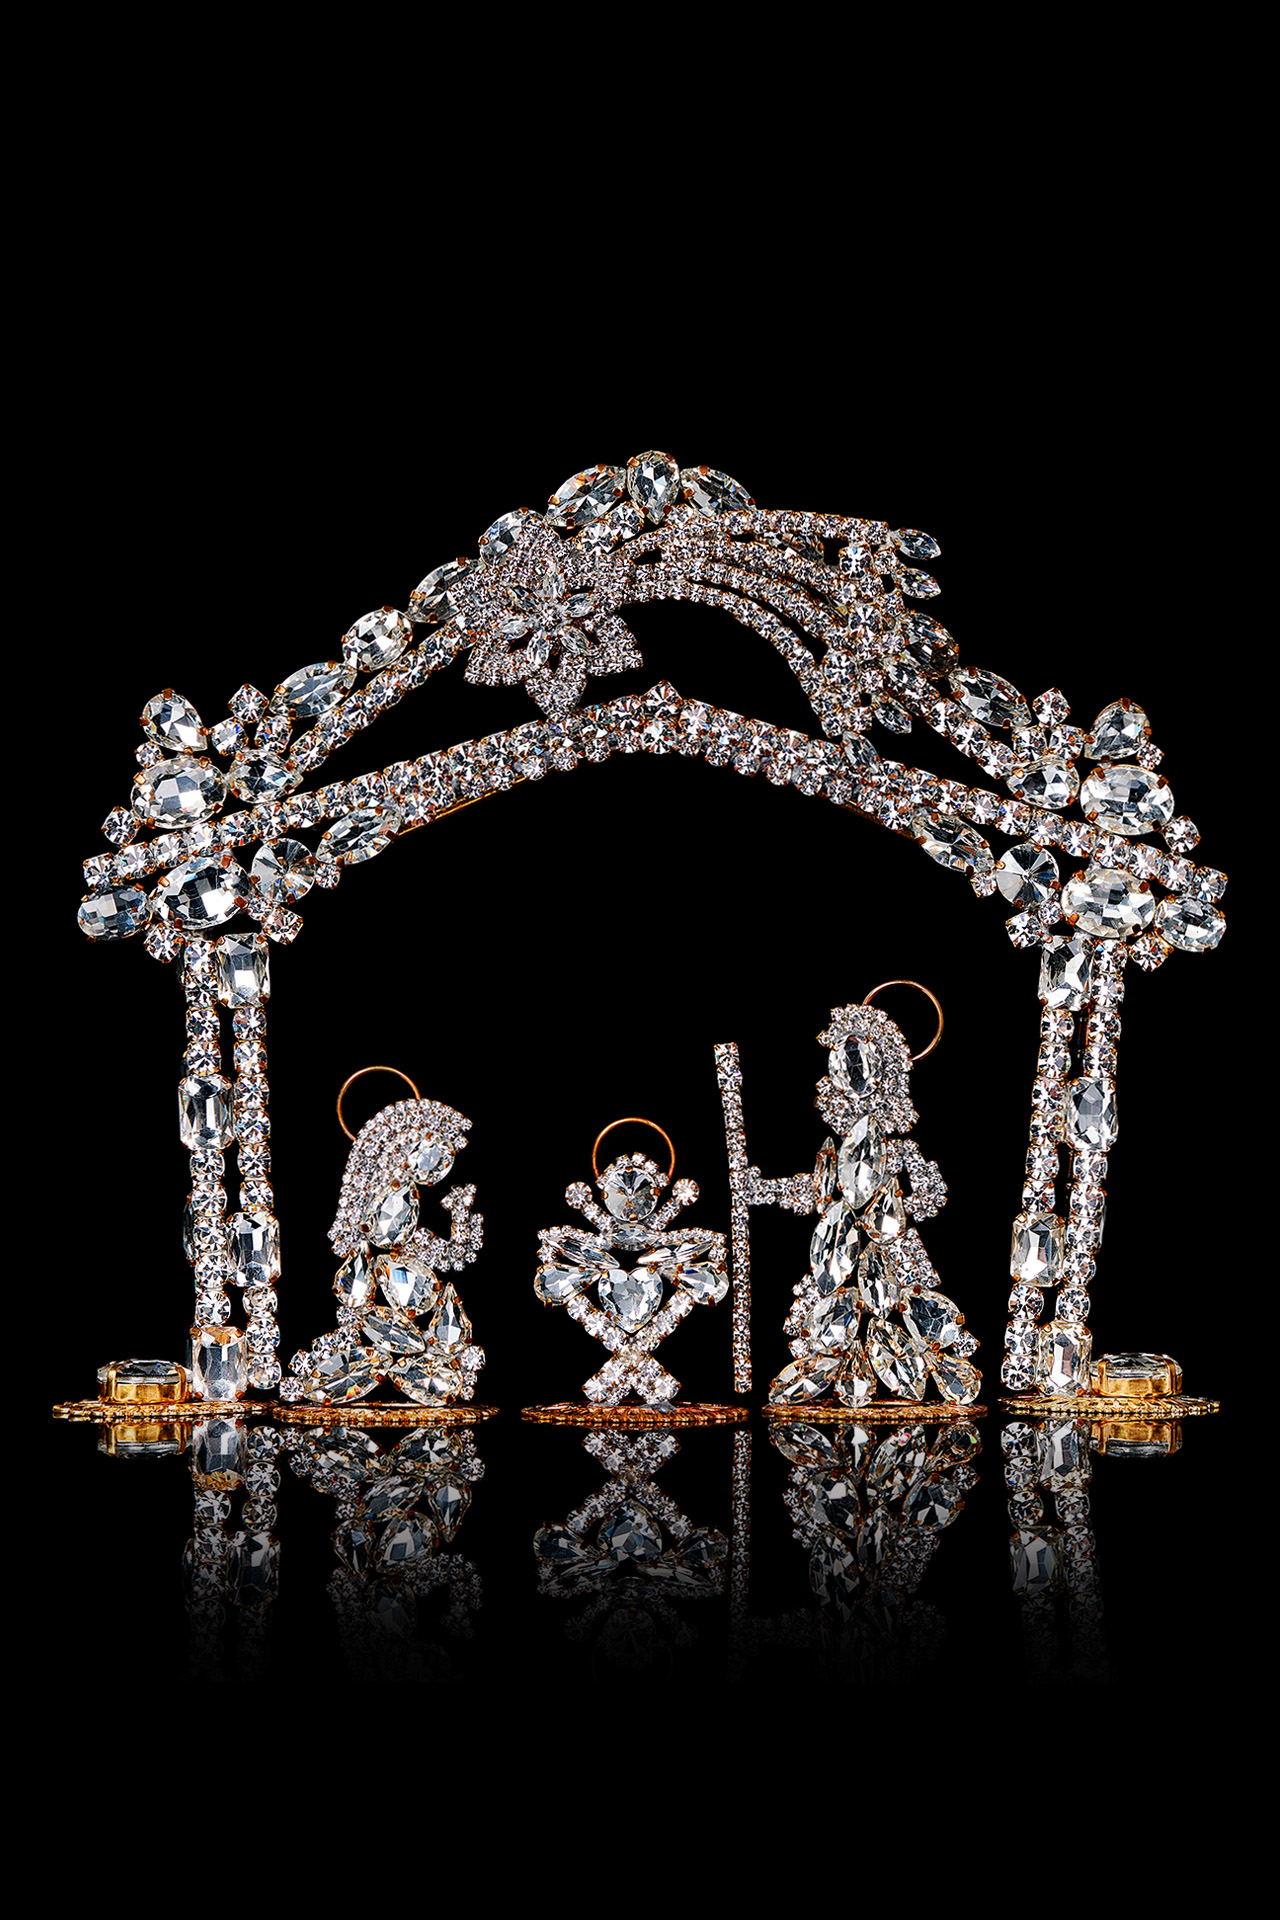 Nativity scene Jewels of Glory with luxurious rhinestones crystals